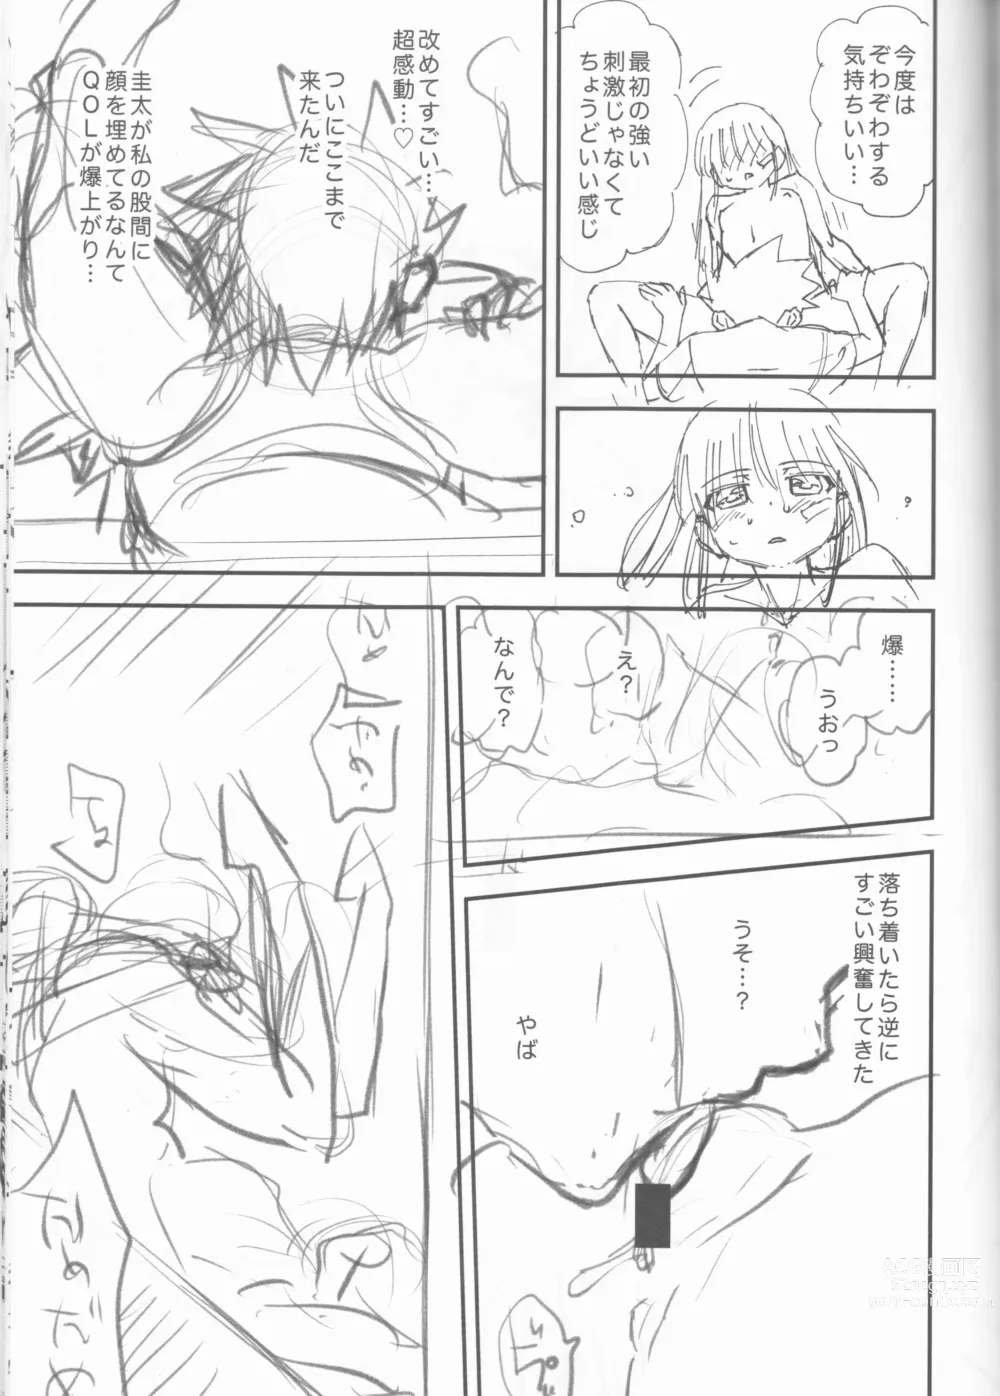 Page 58 of doujinshi kxs.